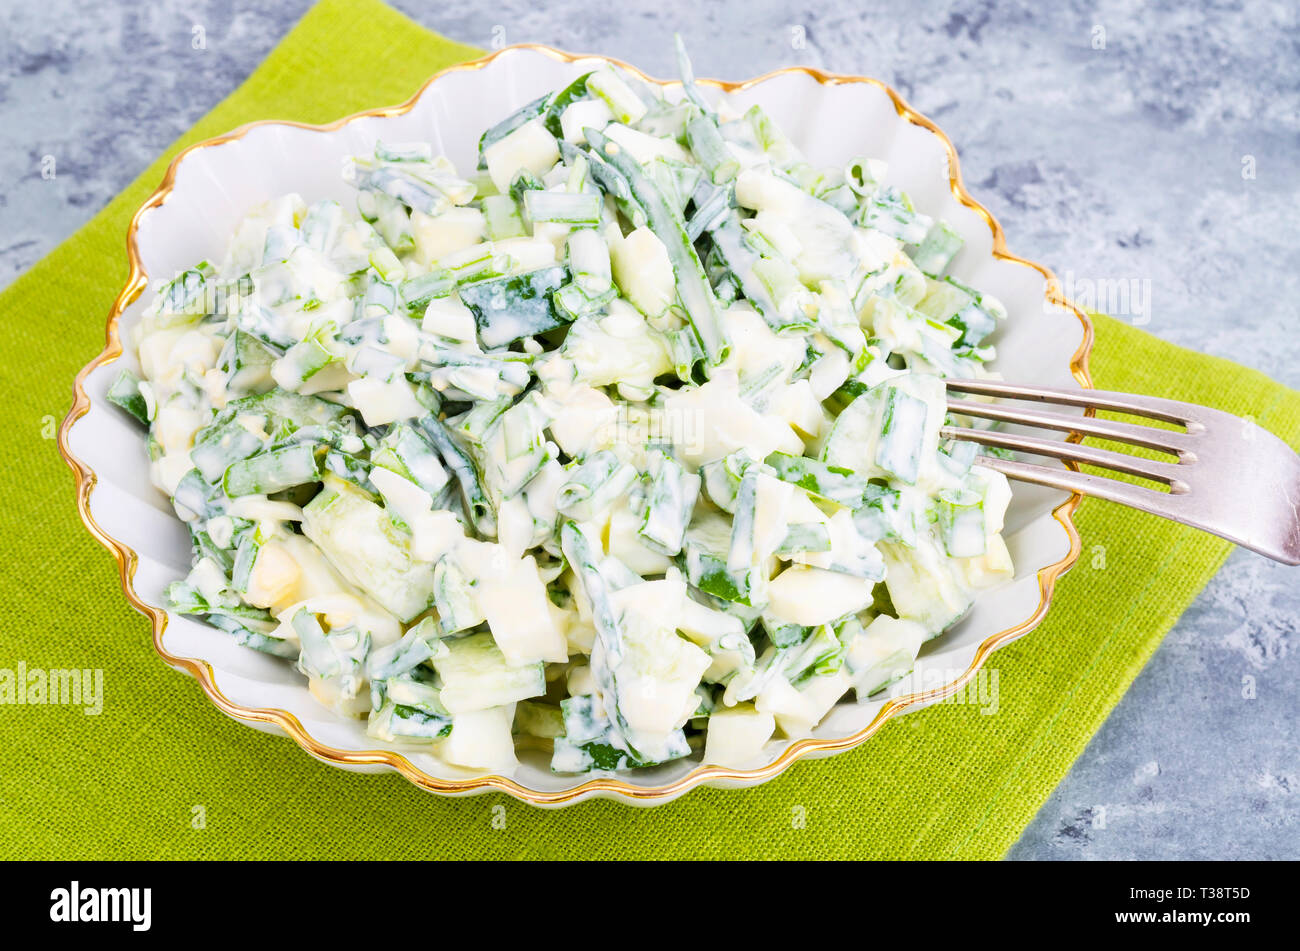 Light dietary egg salad with spring greens, yoghurt dressing. Studio Photo Stock Photo